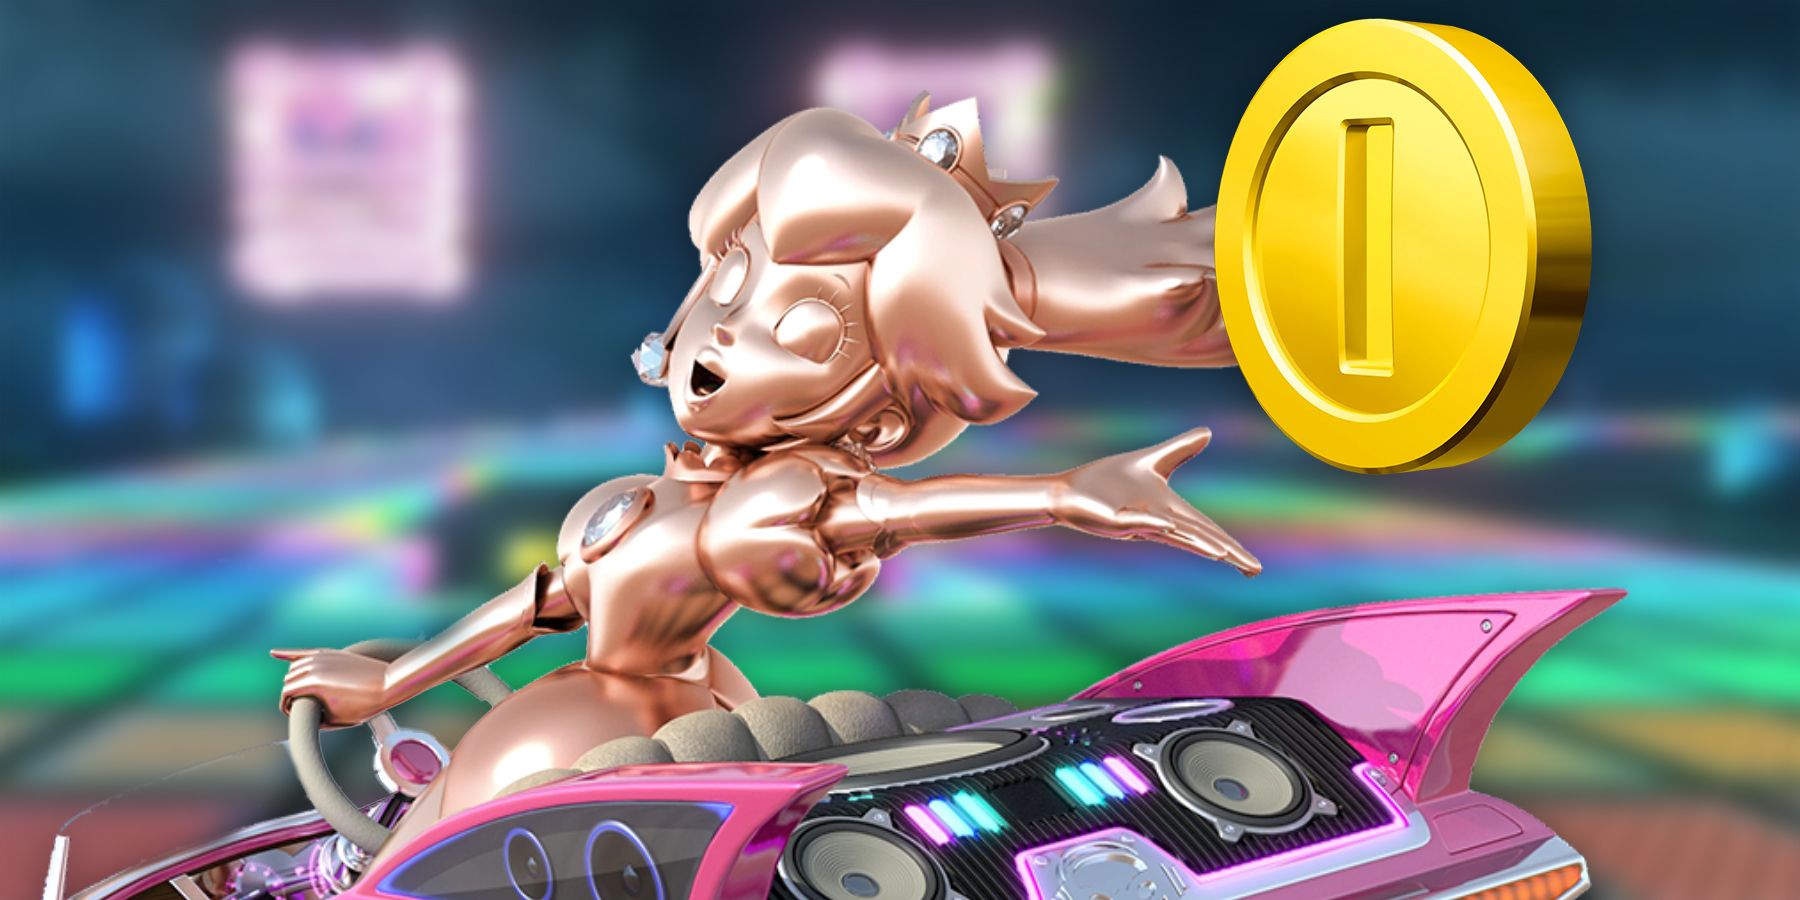 Mario-Kart-8-Deluxe-Pink-Gold-Peach-Coin